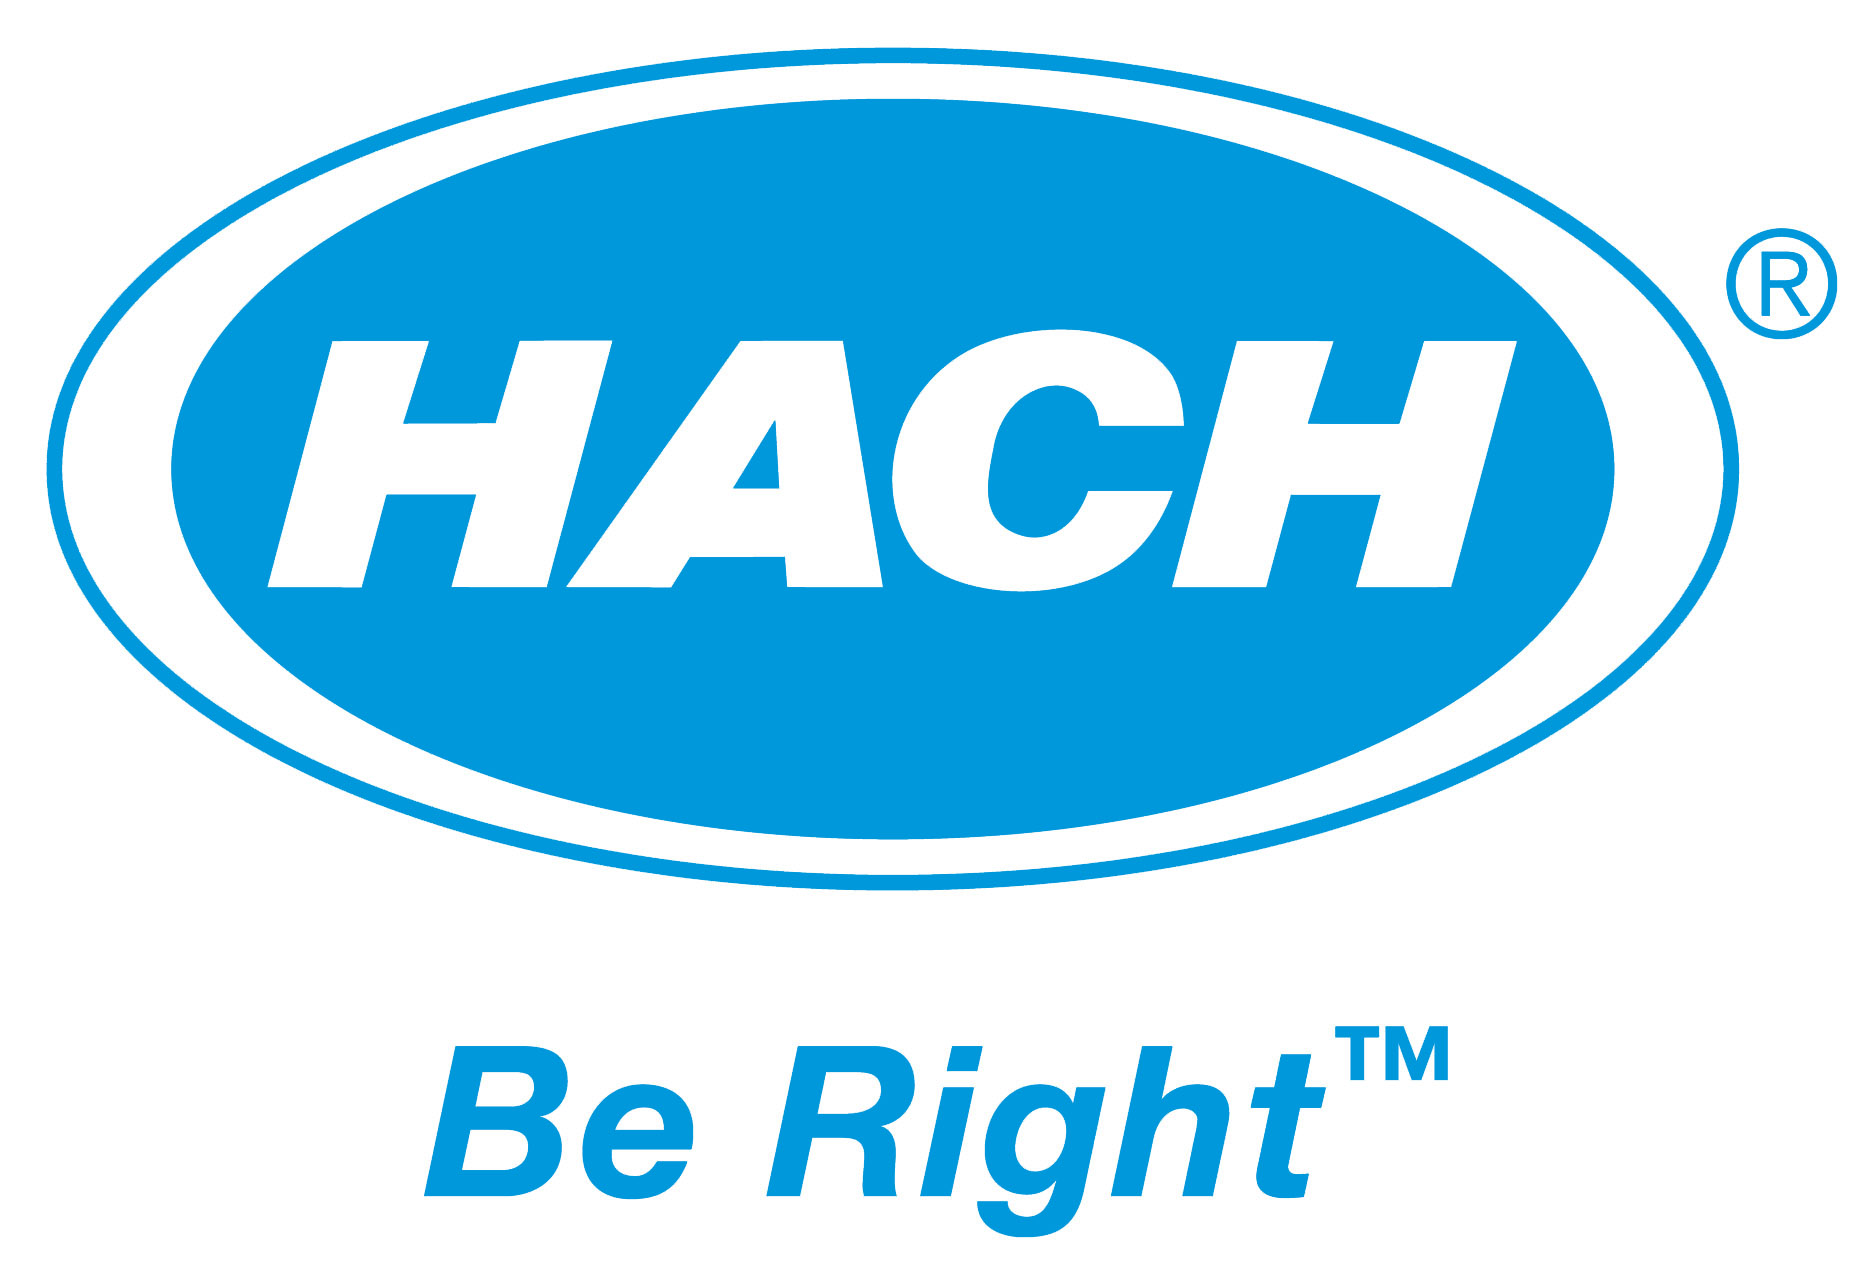 Logo HACH